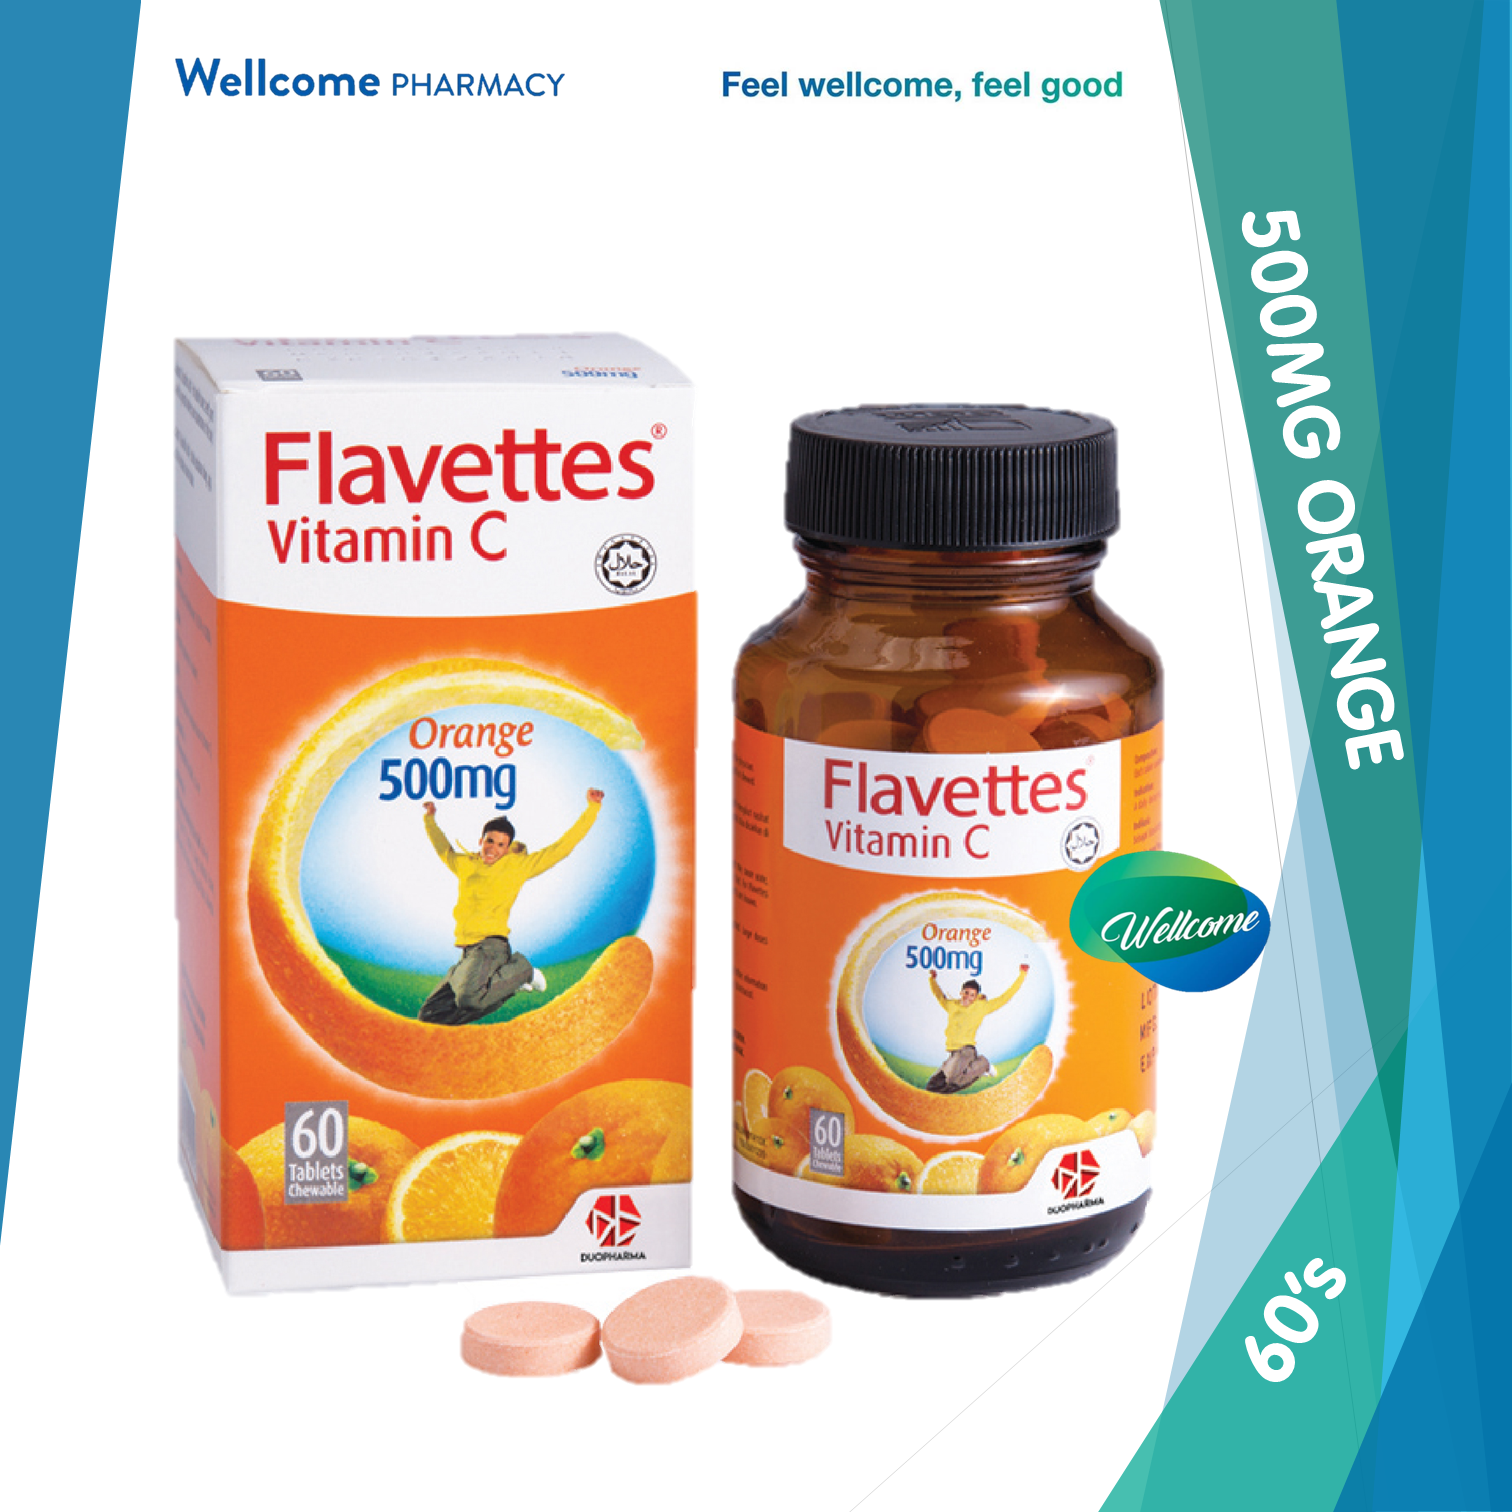 Flavettes Vitamin C 500mg Chewable Tablets Orange Flavour - 60's 